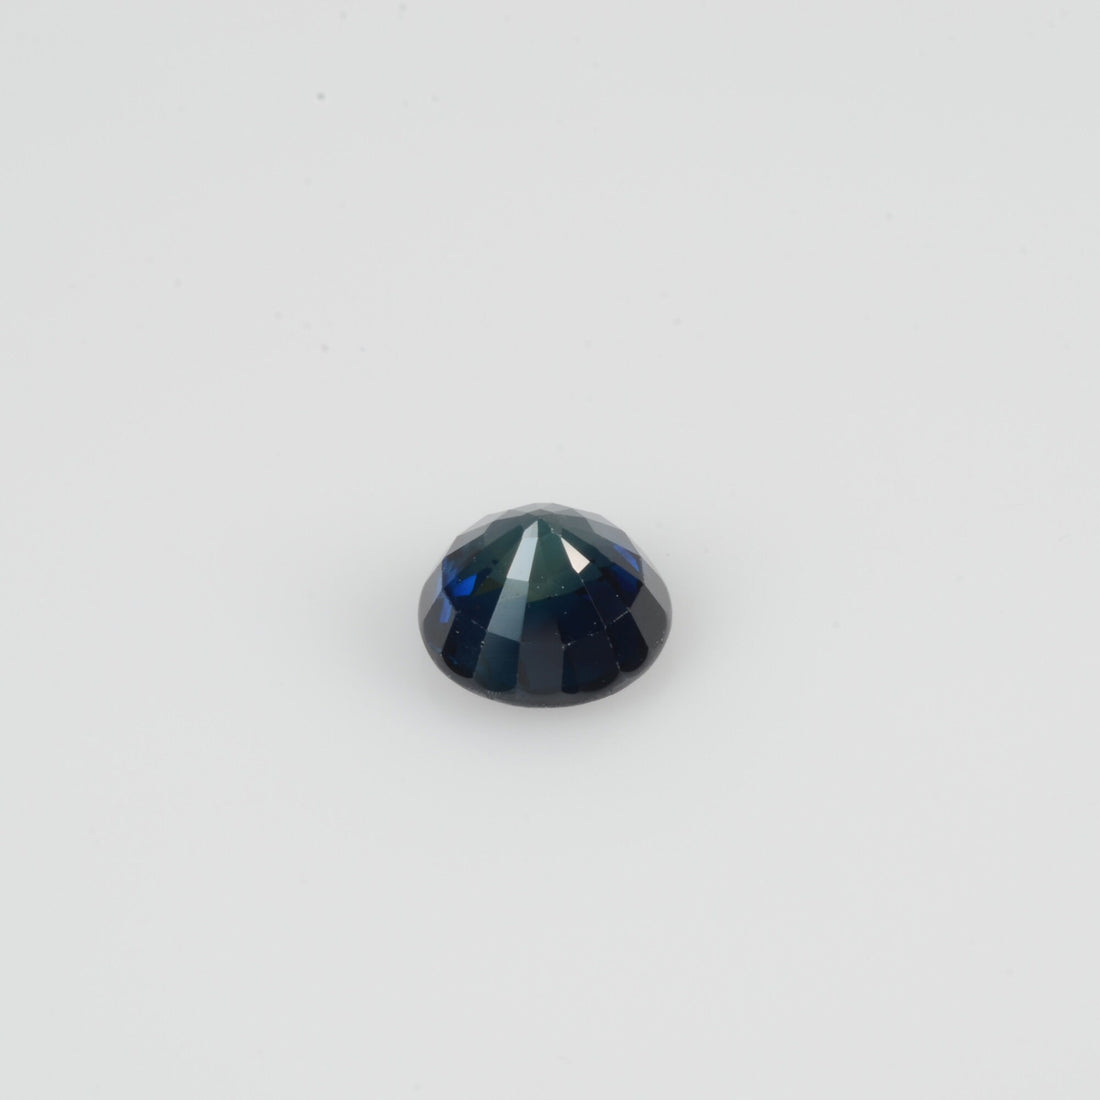 6.3 mm Natural Blue Sapphire Loose Gemstone Round Cut